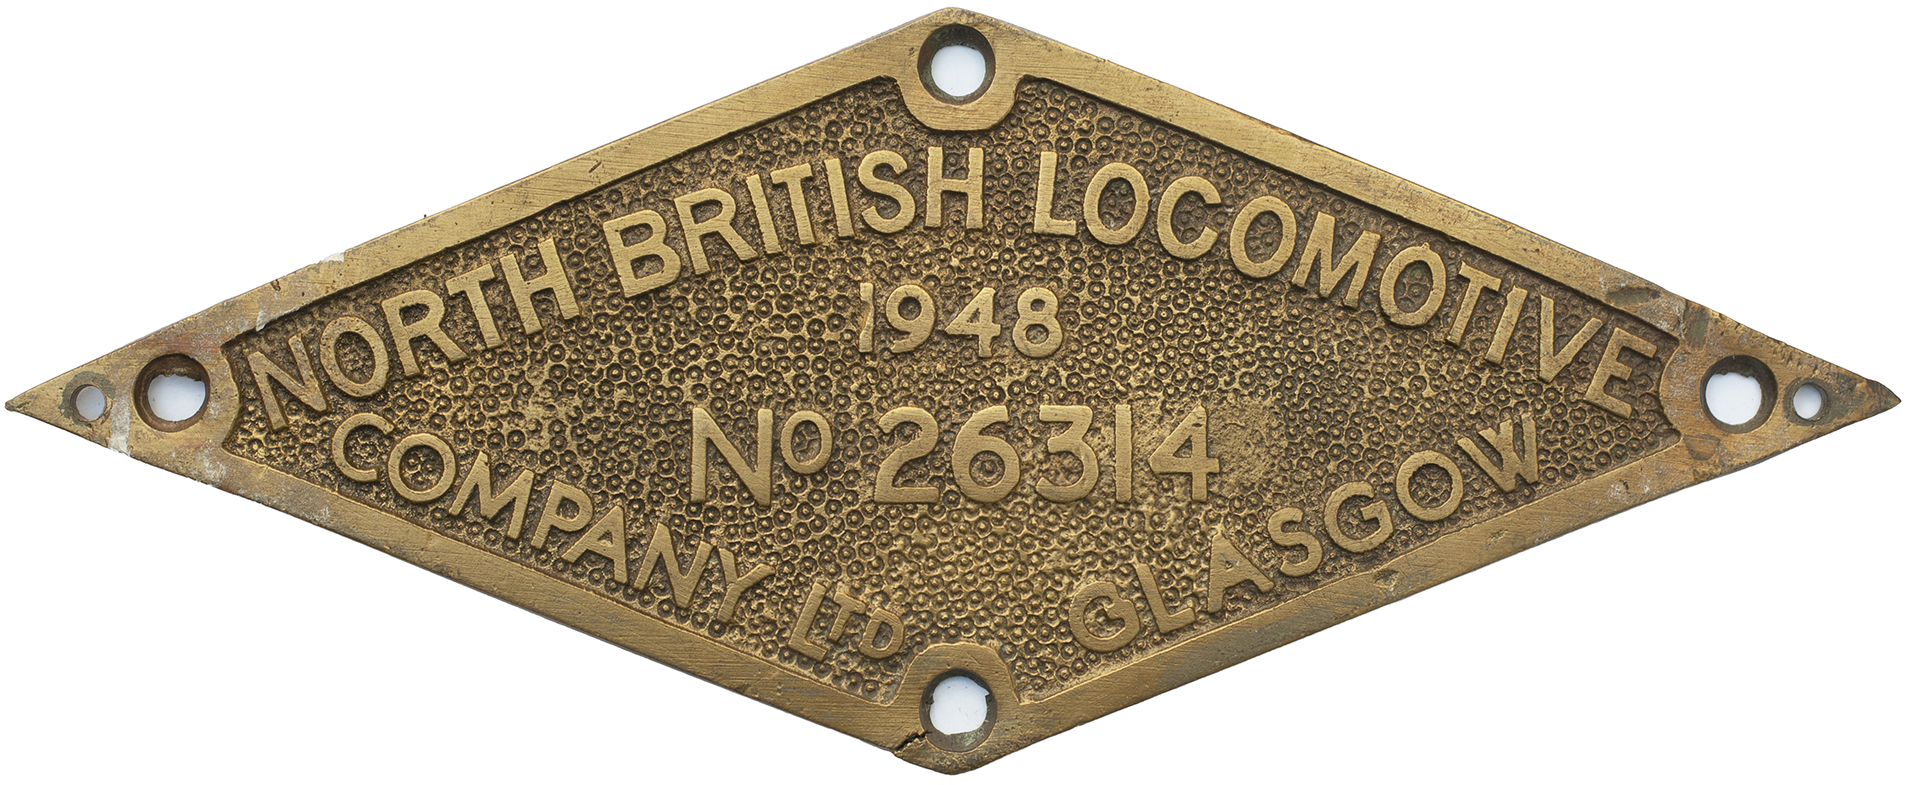 Worksplate NORTH BRITISH LOCOMOTIVE COMPANY LTD GLASGOW No 26314 1948 ex South African Railway class